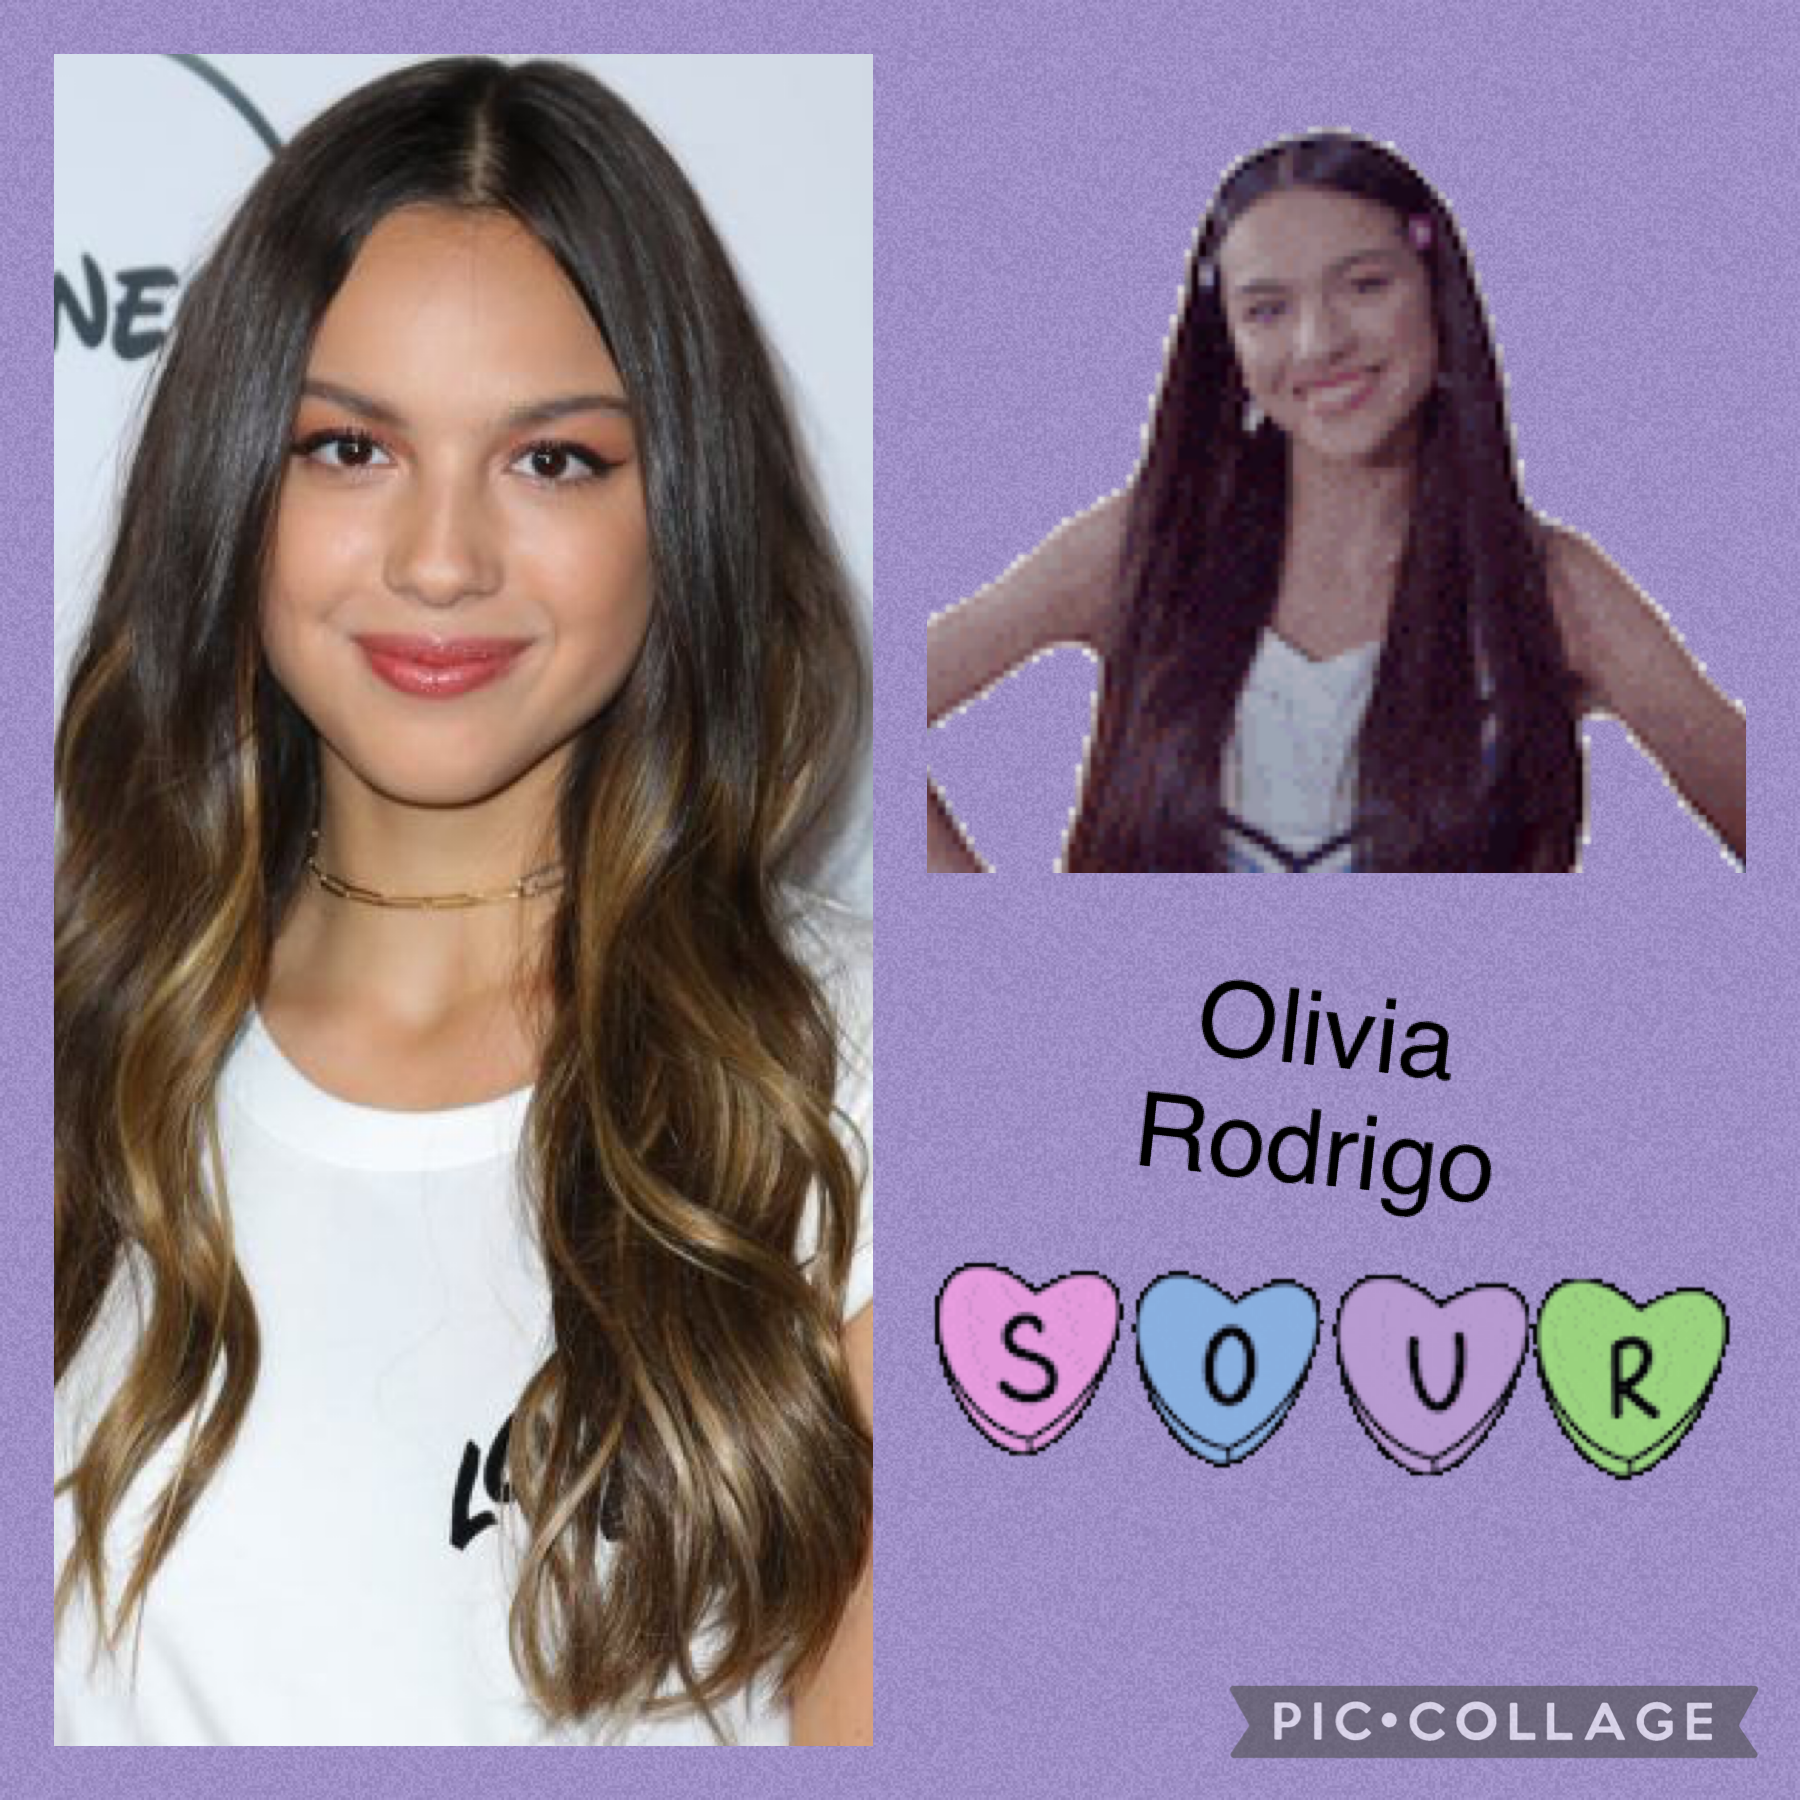 Olivia rodrigo
